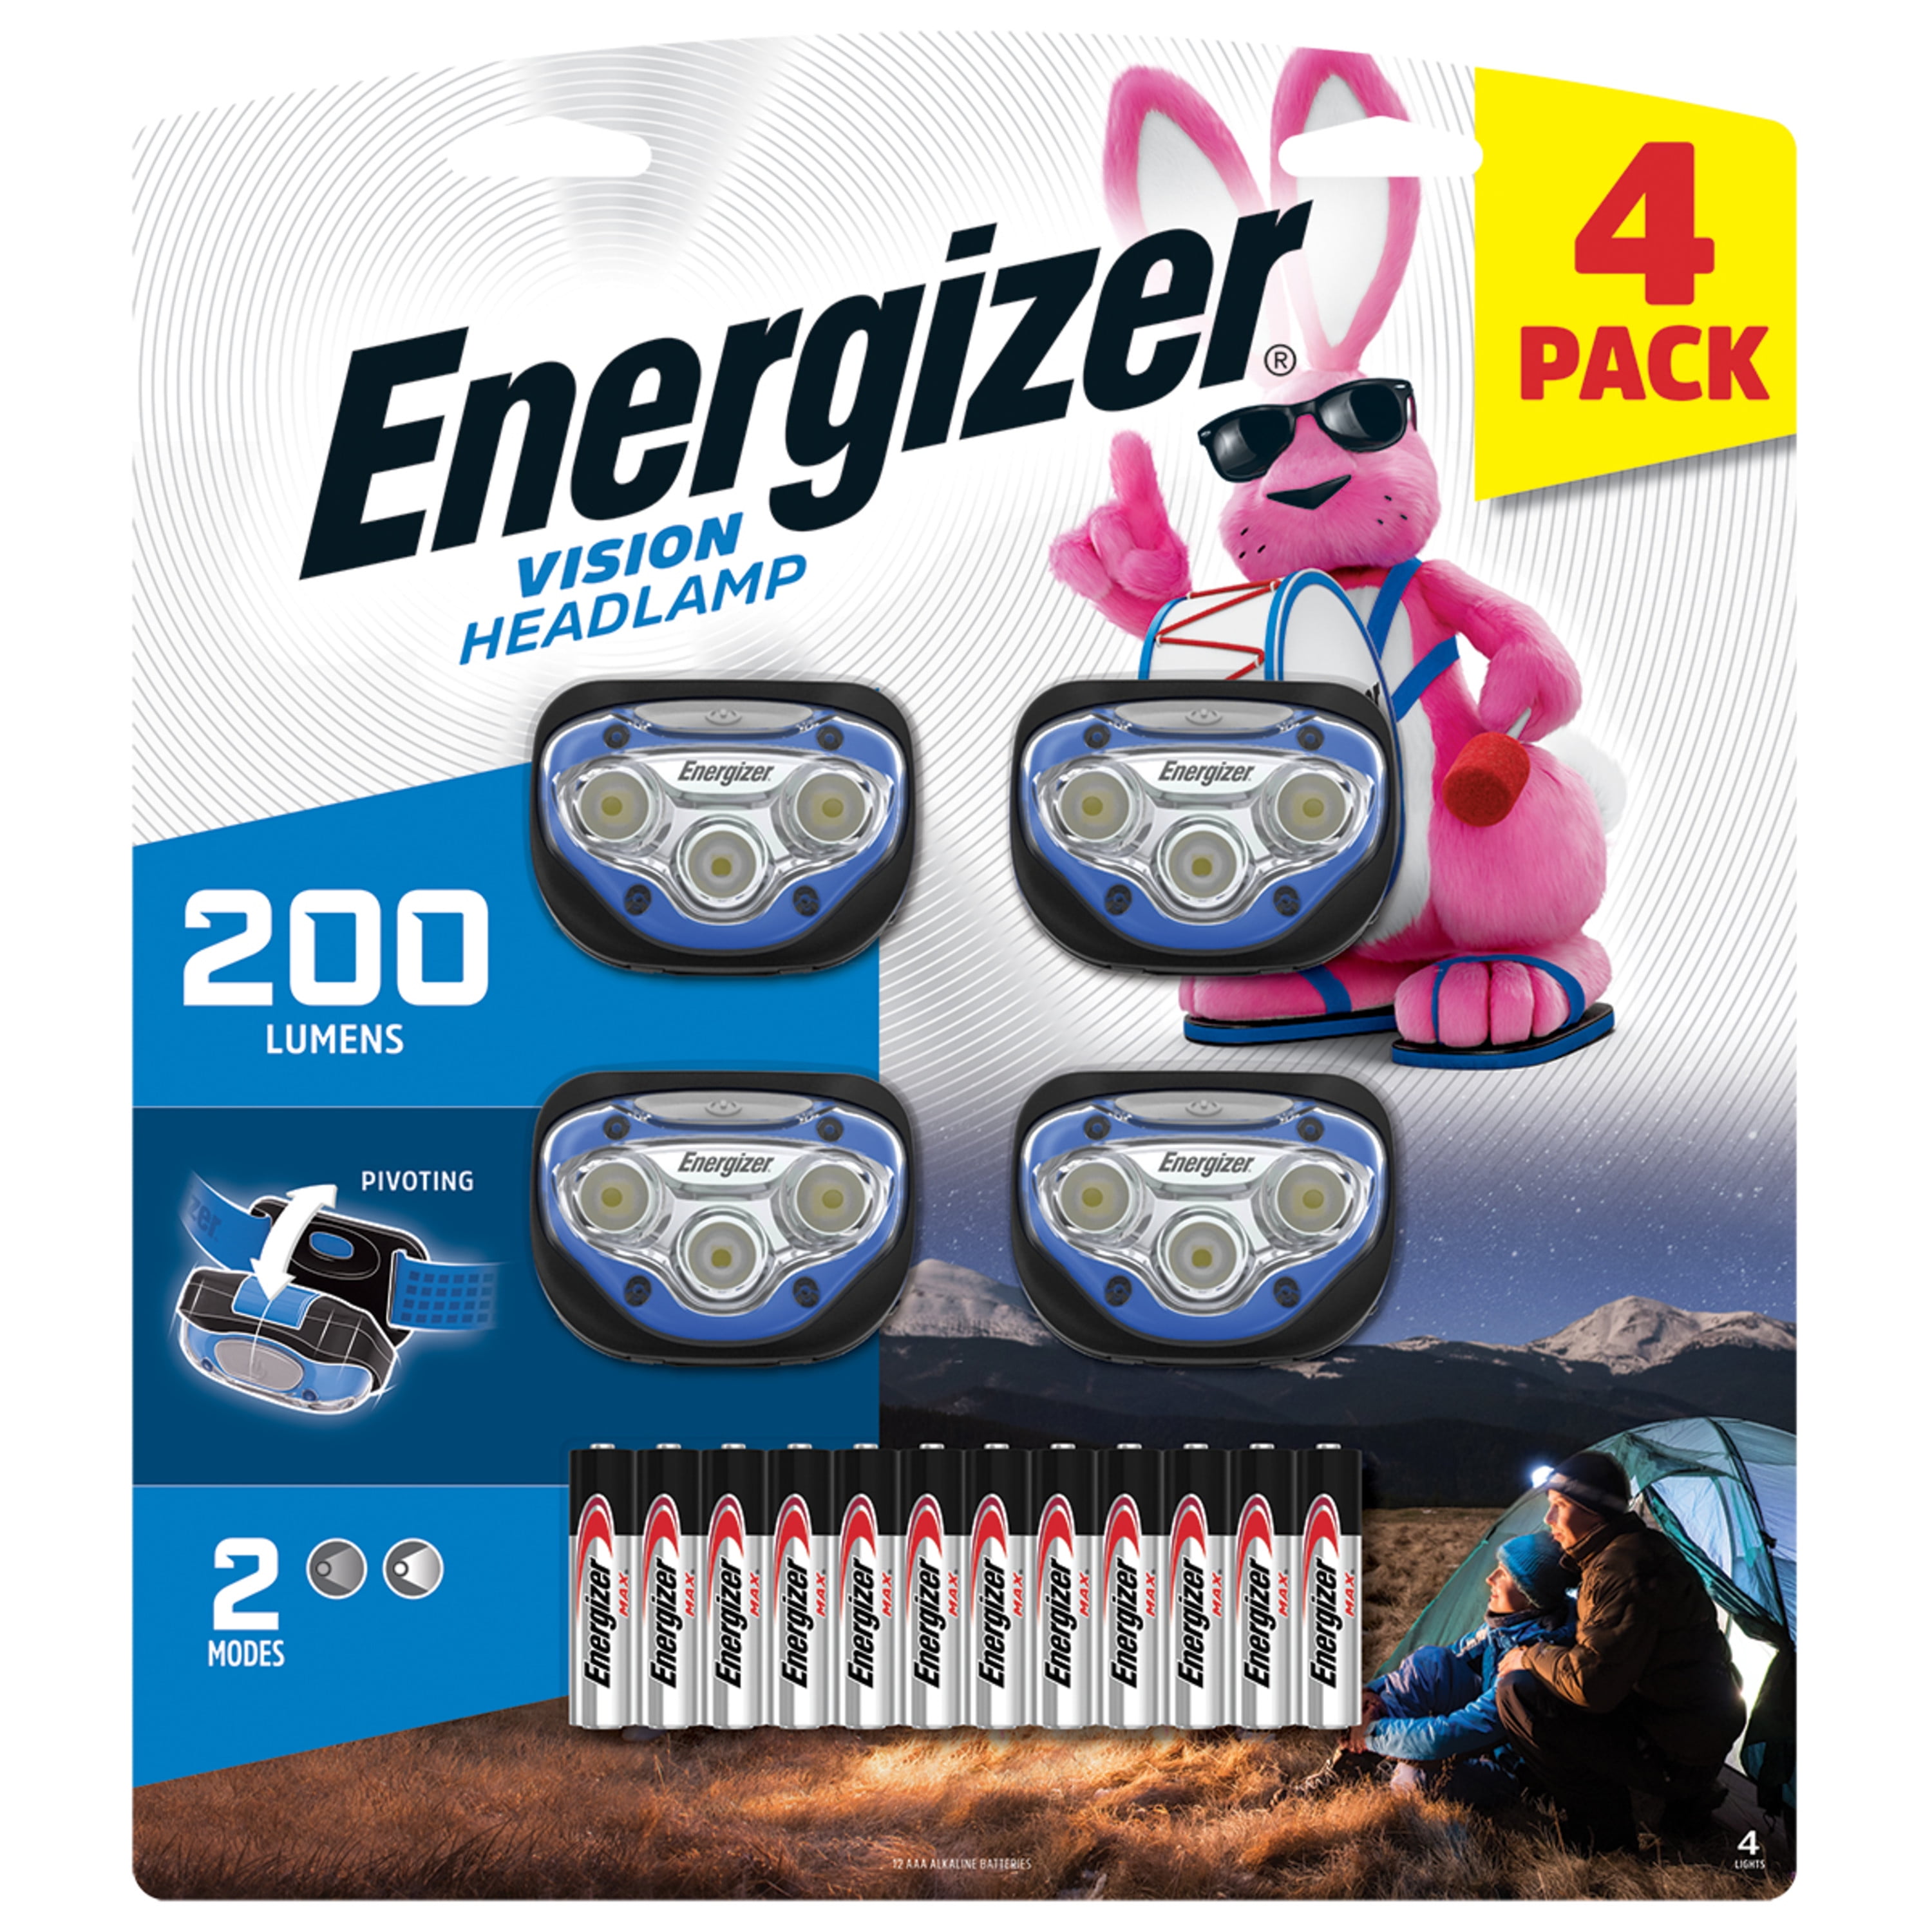 Energizer 2 Vision HD LED Headlamps with Energizer Camping Lantern Bundle 